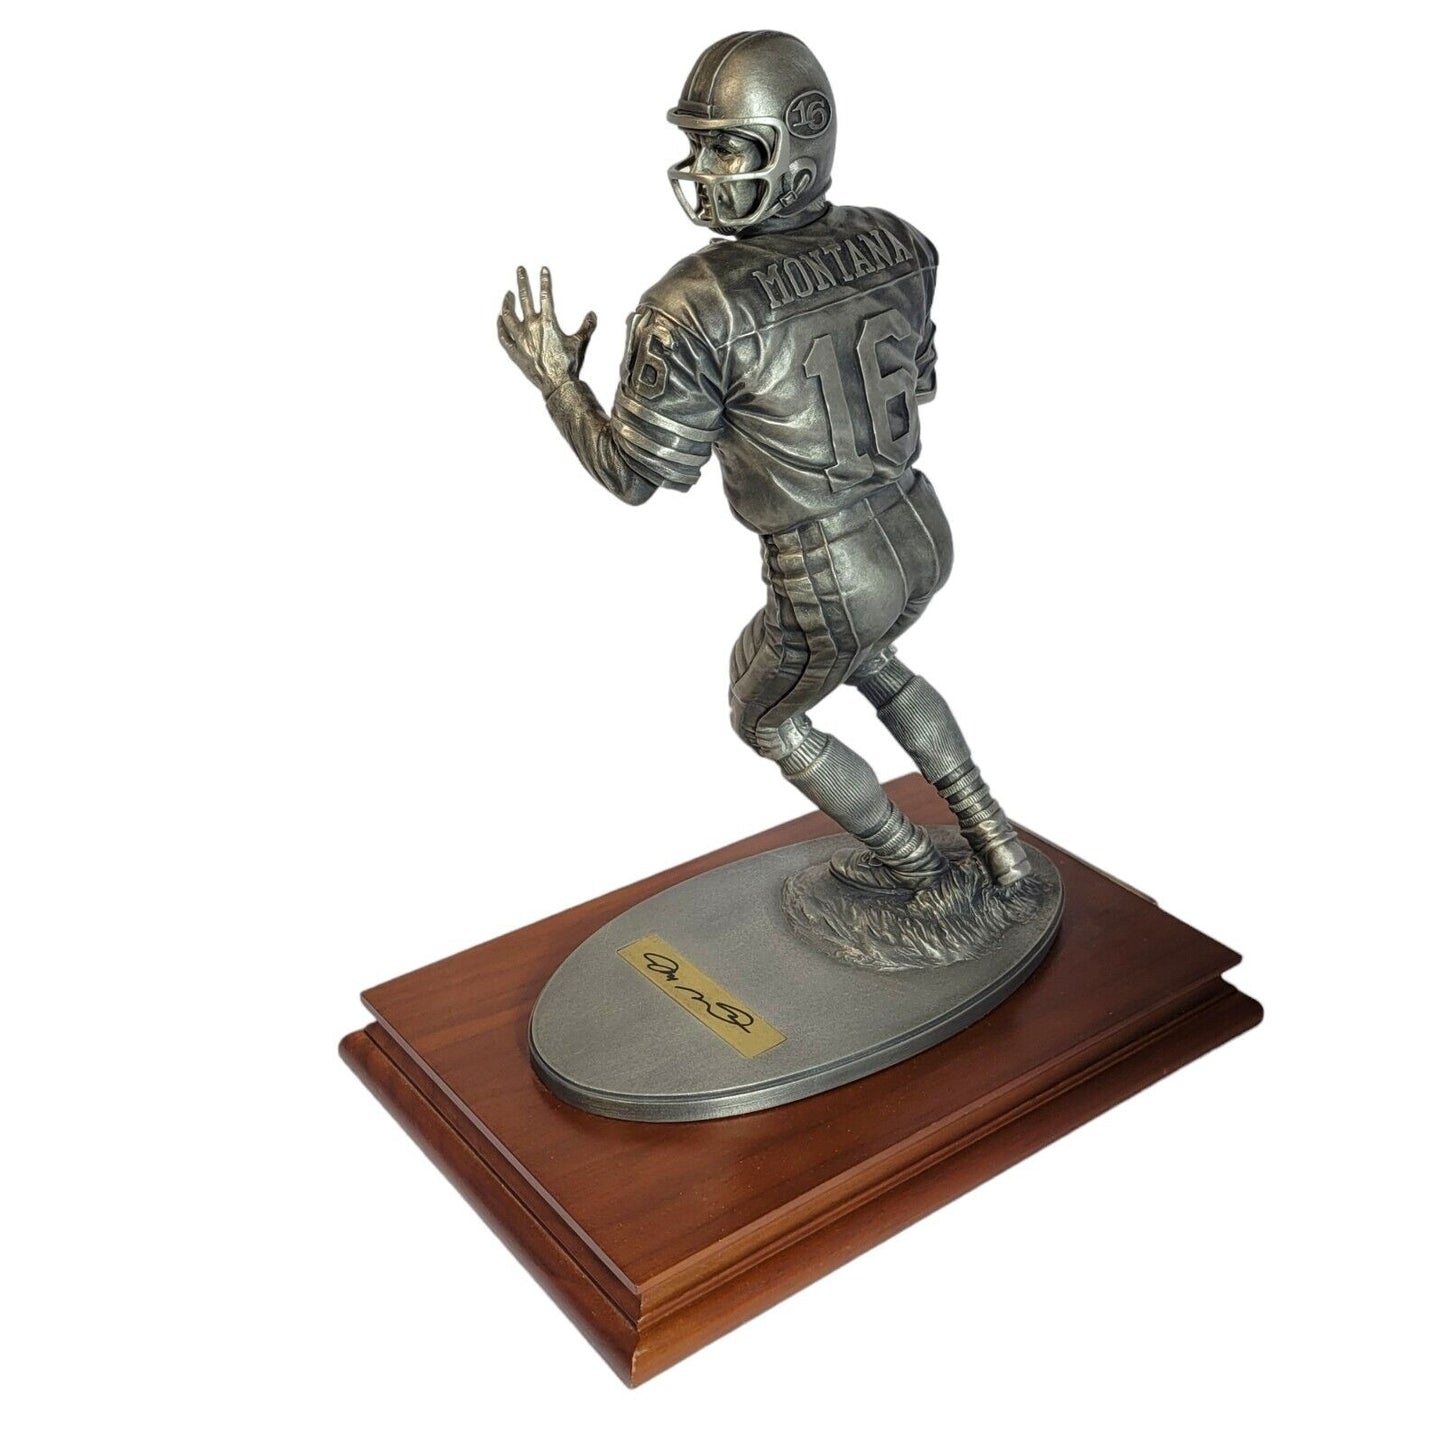 Joe Montana Autographed Gartlan Pewter Figurine #358/500 SF 49ers NFL HOF 12"